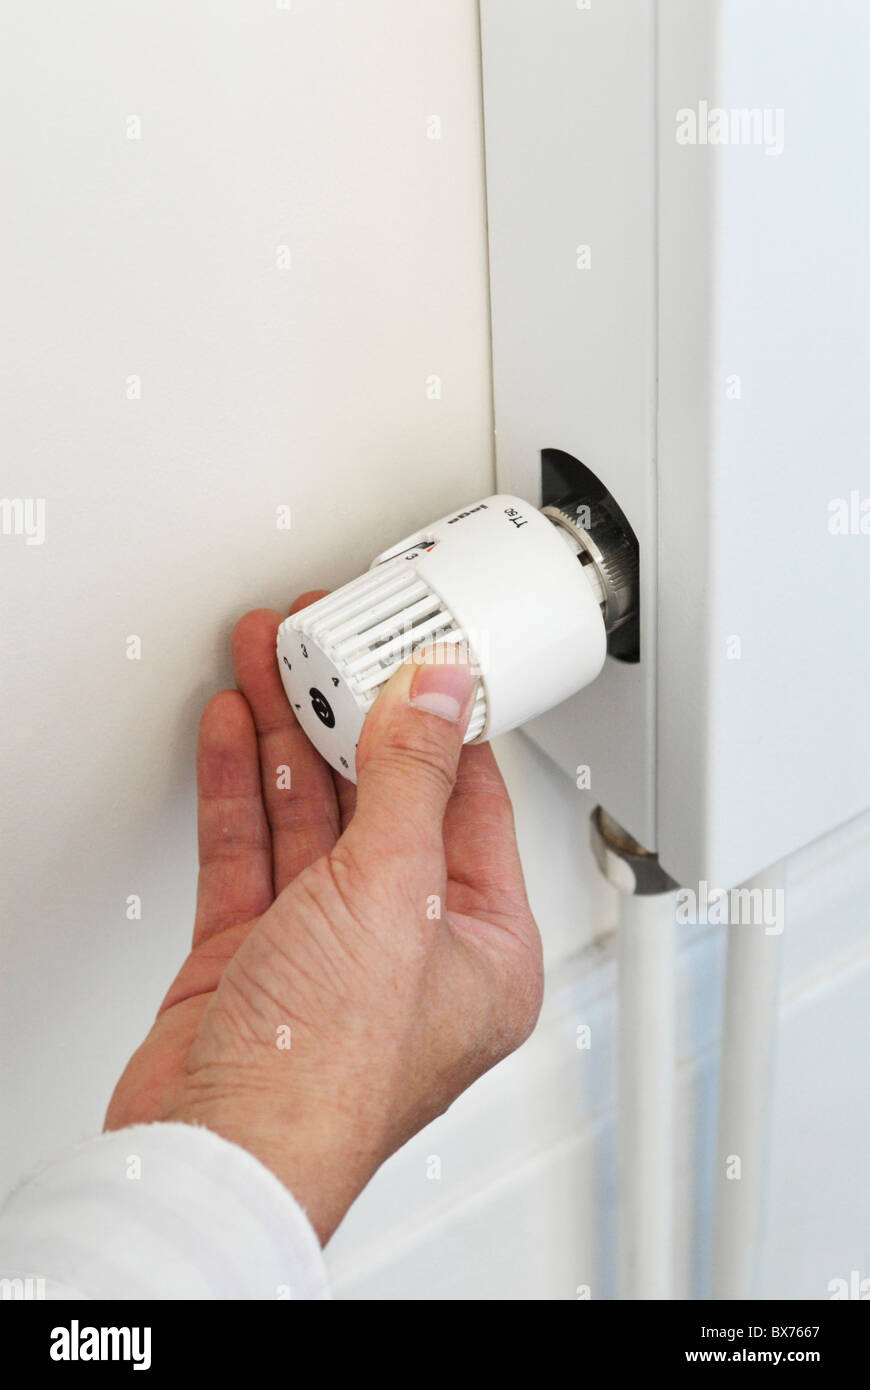 Man adjusting thermostat on radiator Stock Photo